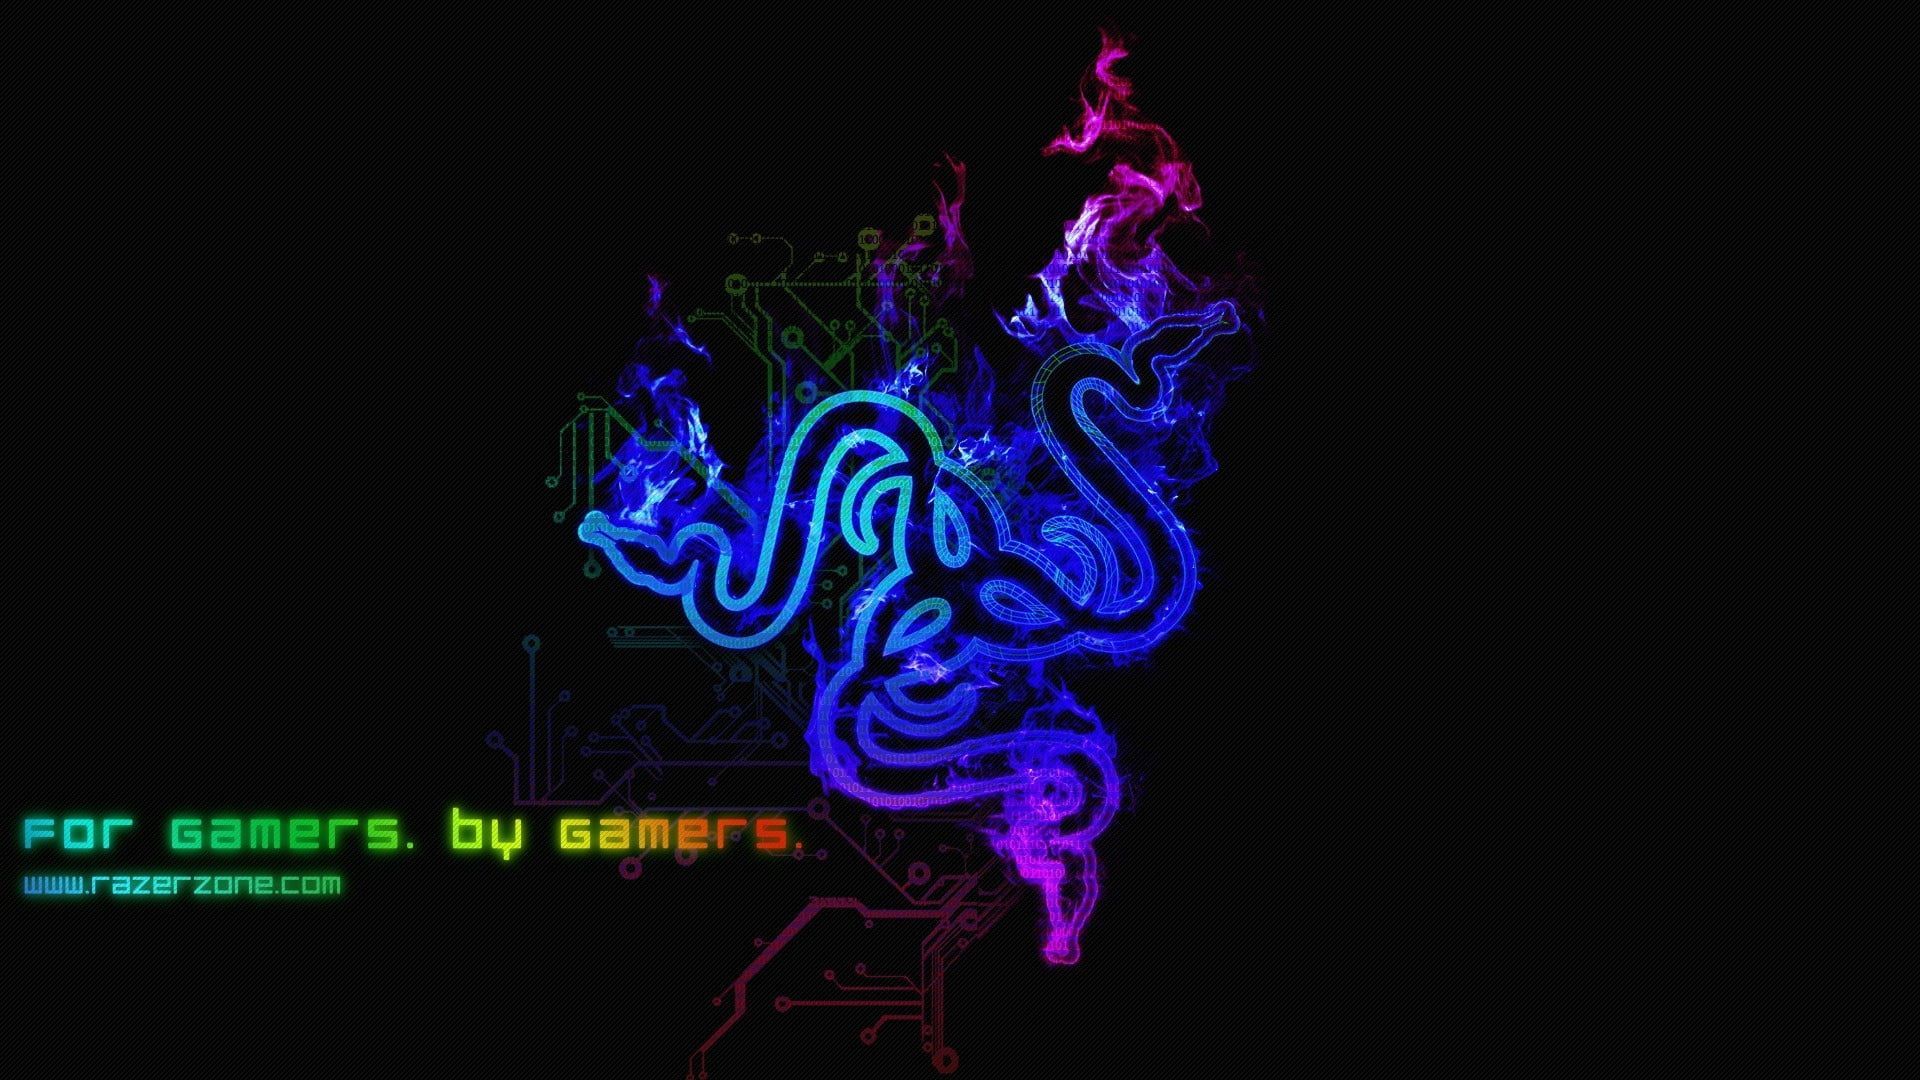 Razer logo #Razer video games PC gaming simple background #simple #colorful P #wallpaper #hdwallp. Simple background, Full HD wallpaper, Gaming wallpaper hd